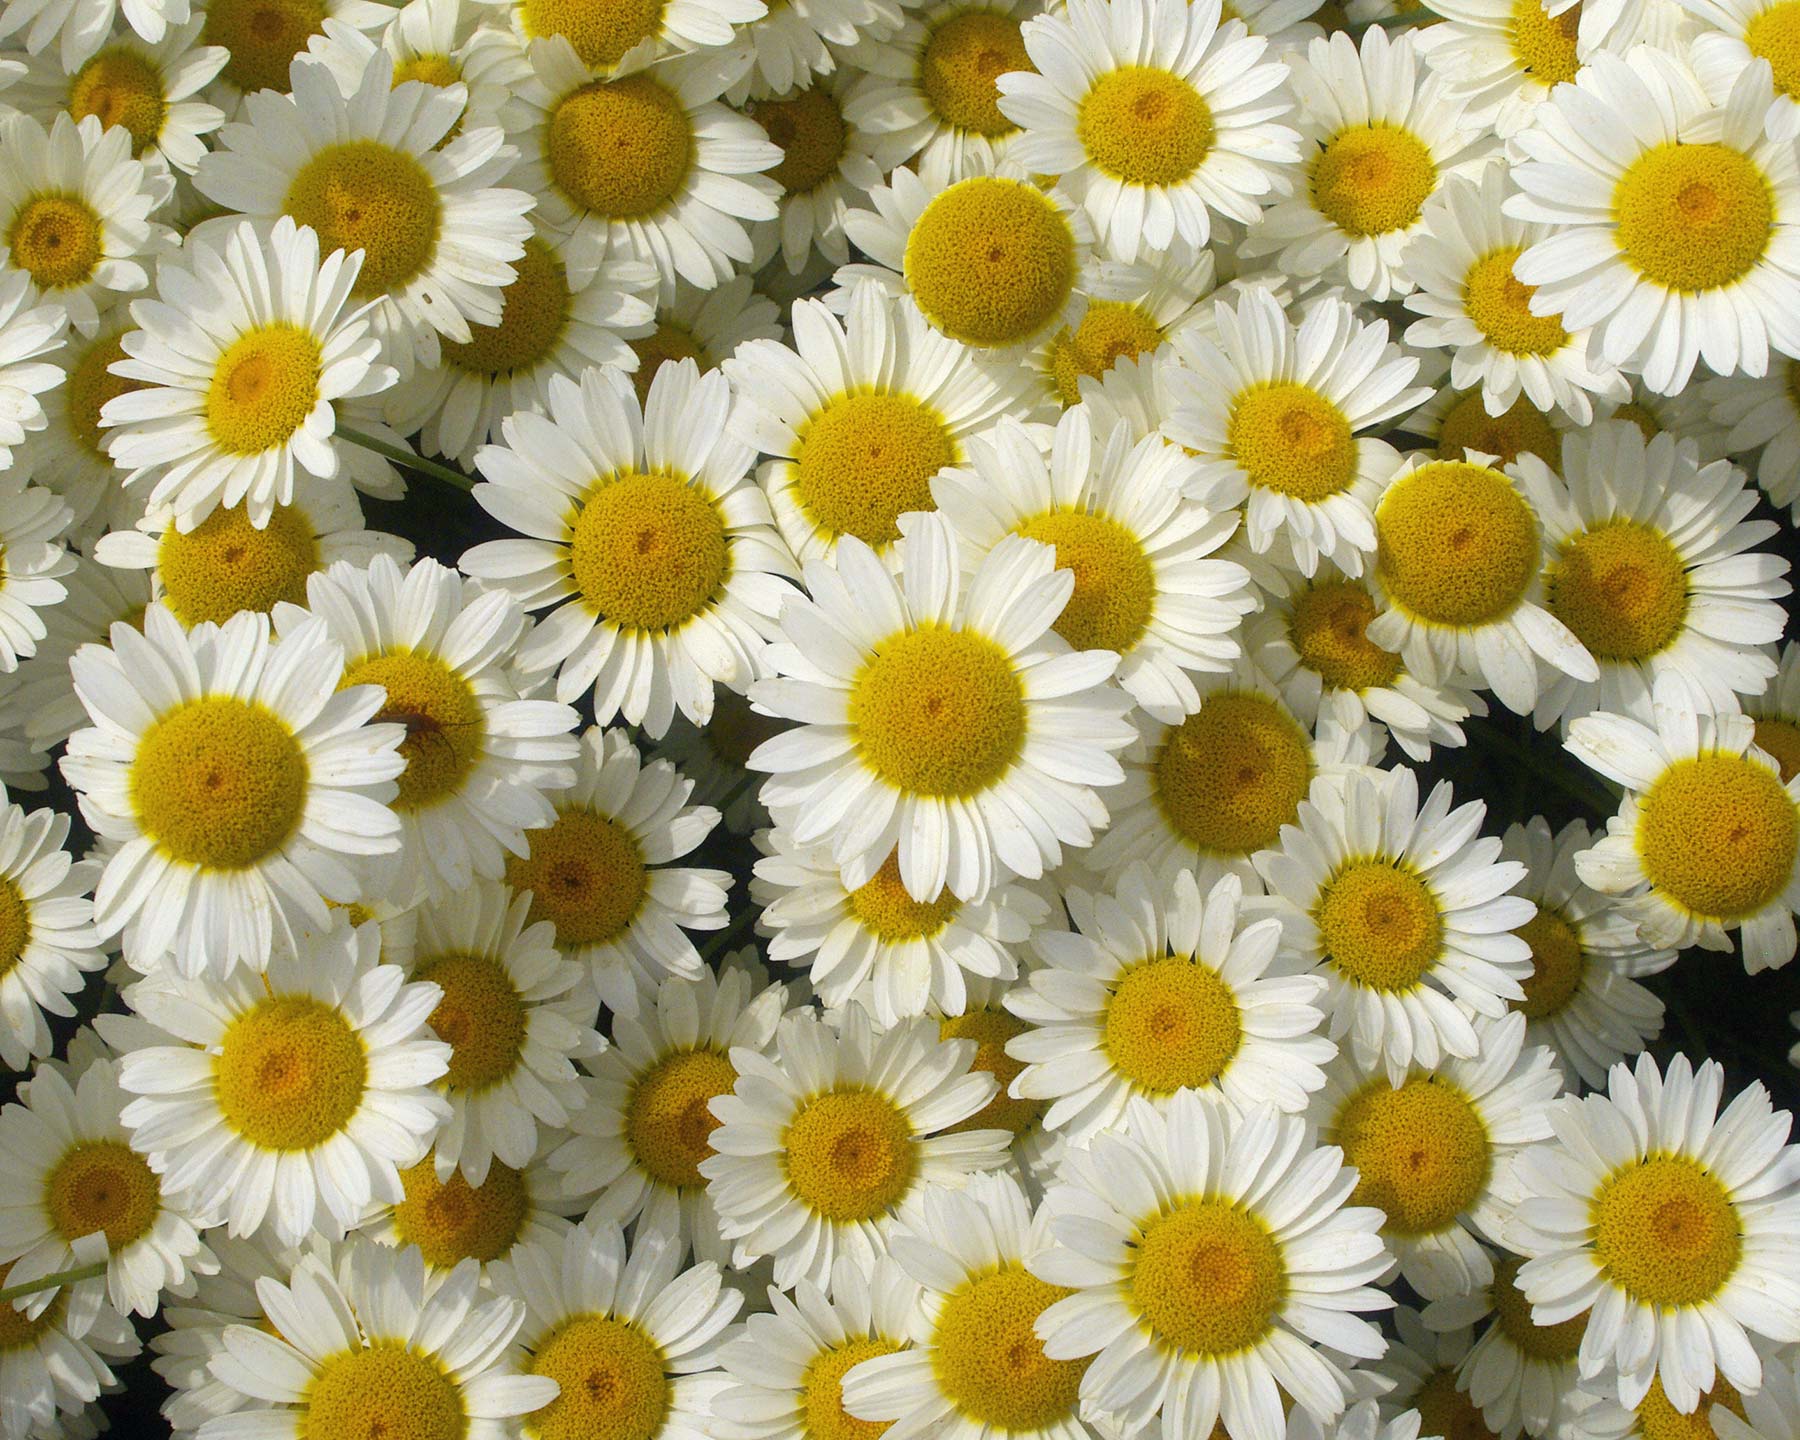 Athemis tinctoria 'Sauce Hollandaise' daisy type flower with yellow/cream petals and deep yellow centre